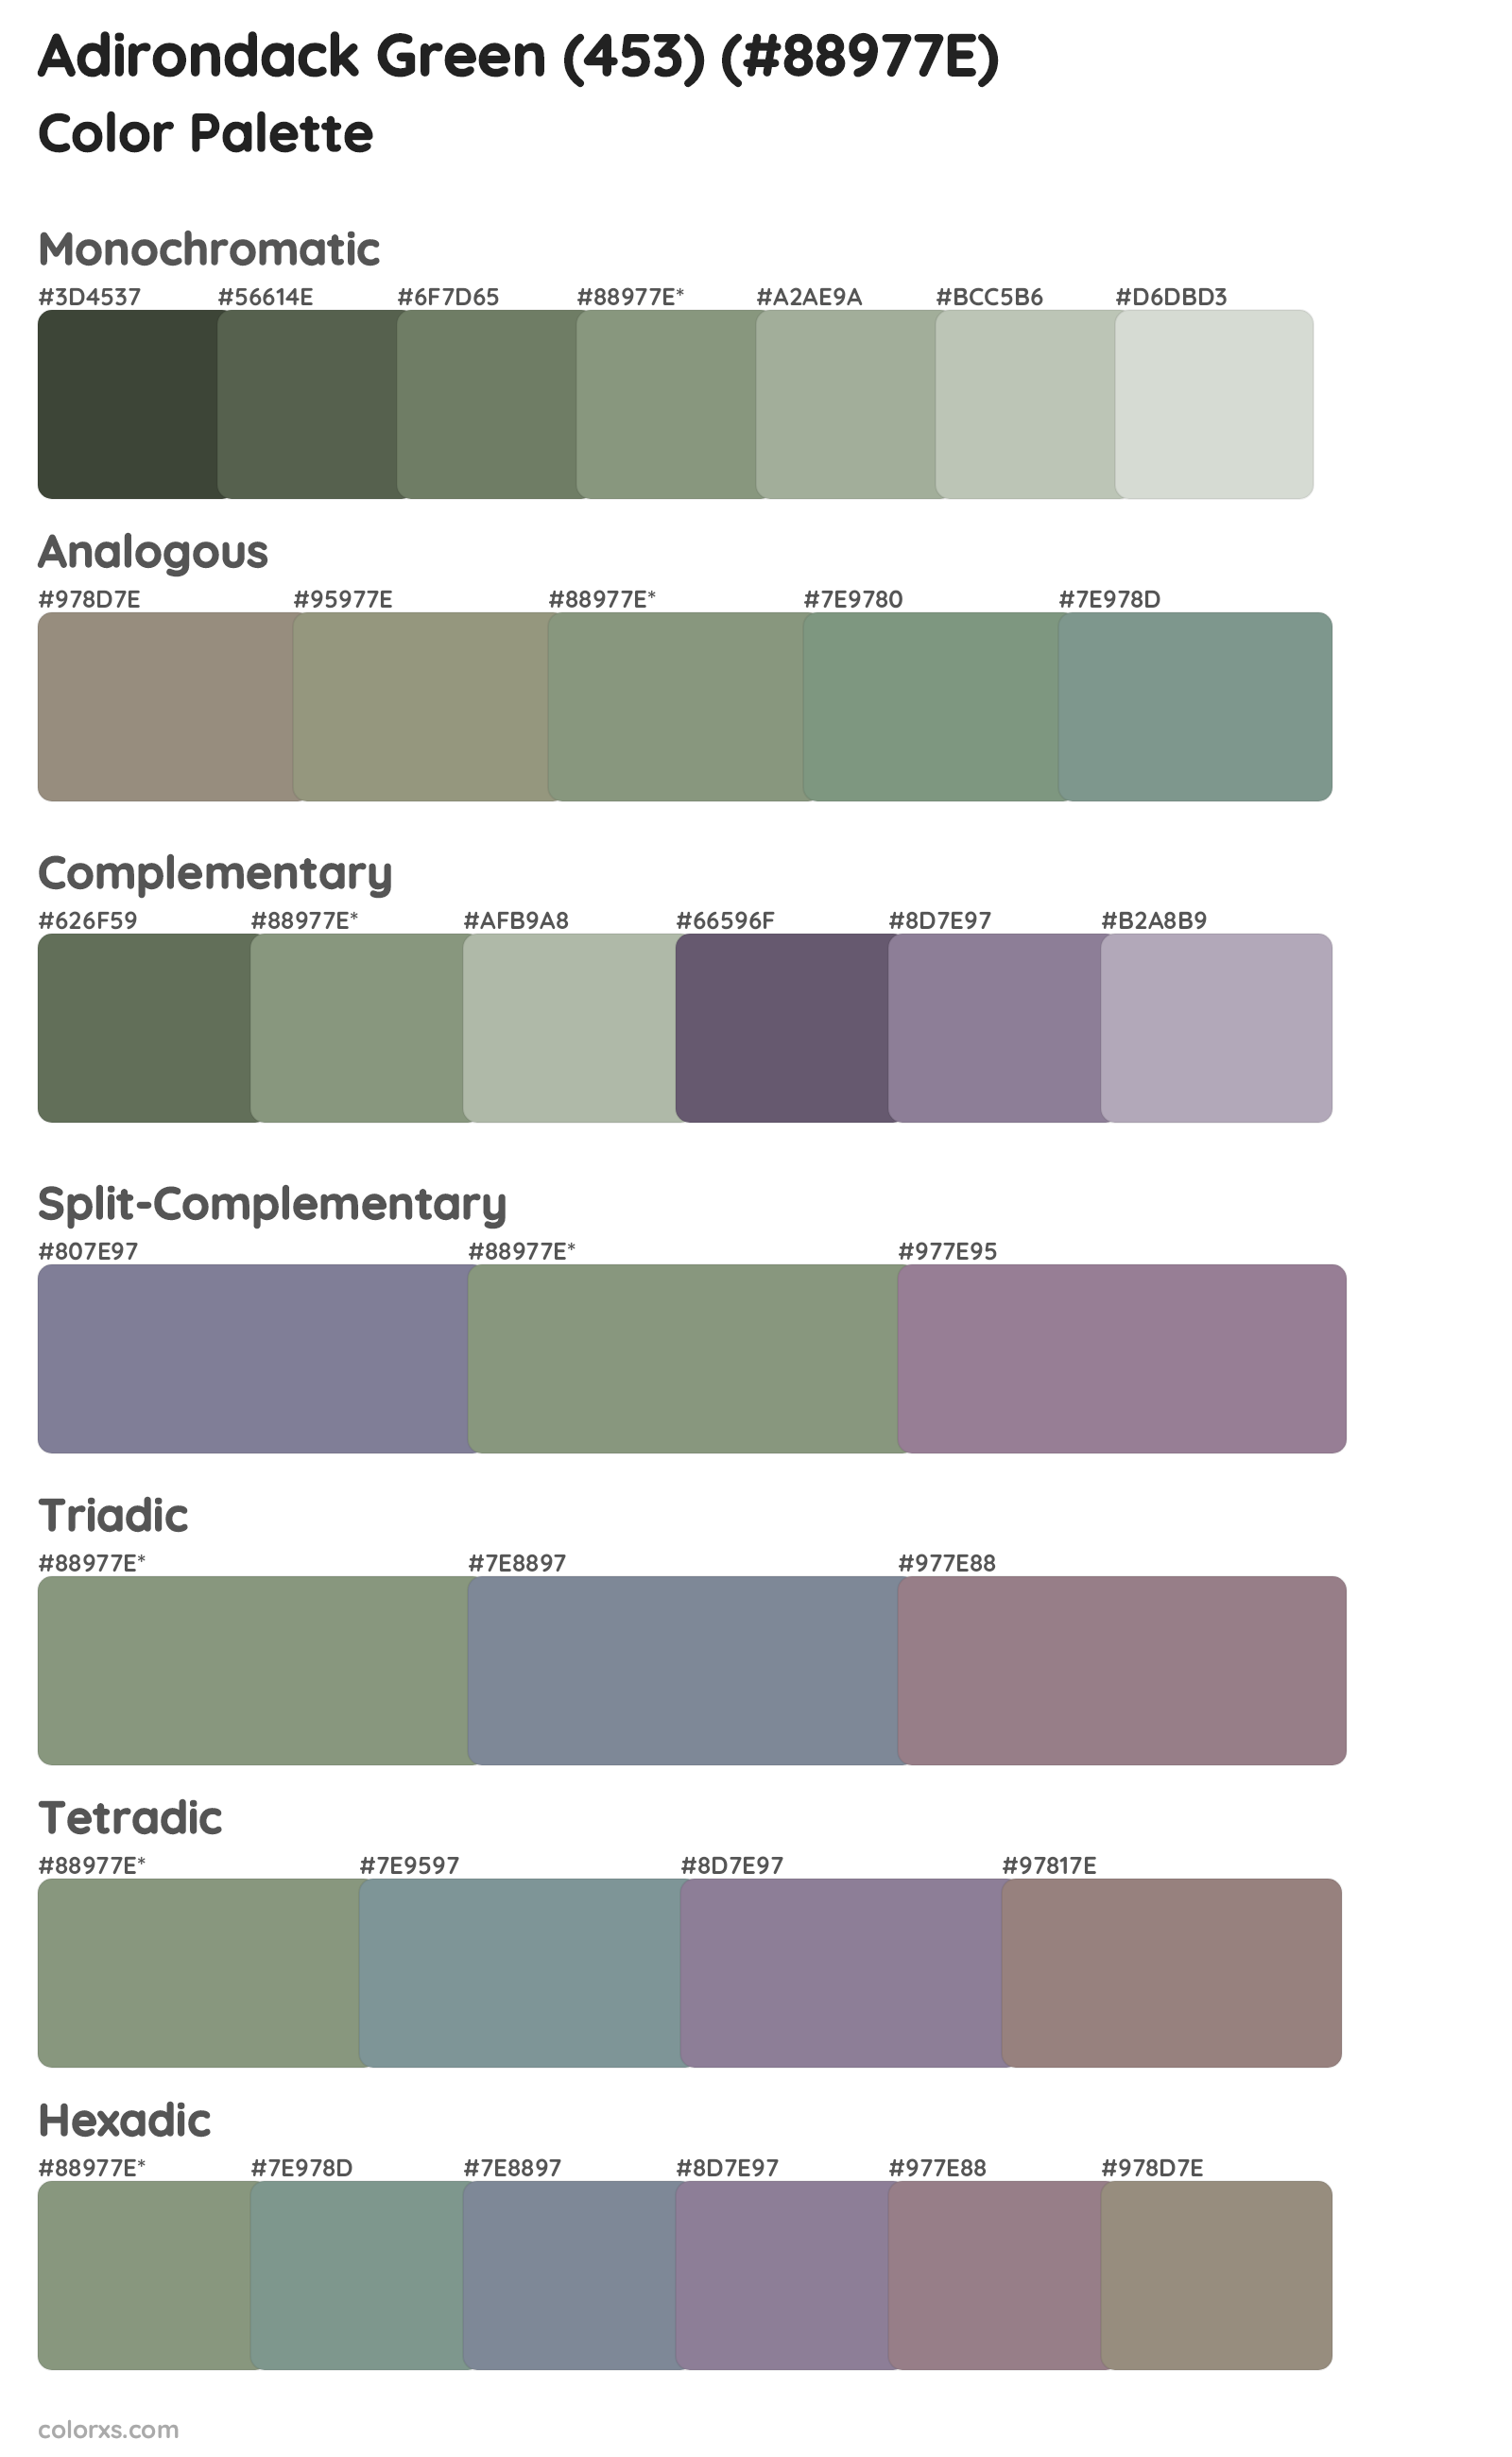 Adirondack Green (453) Color Scheme Palettes